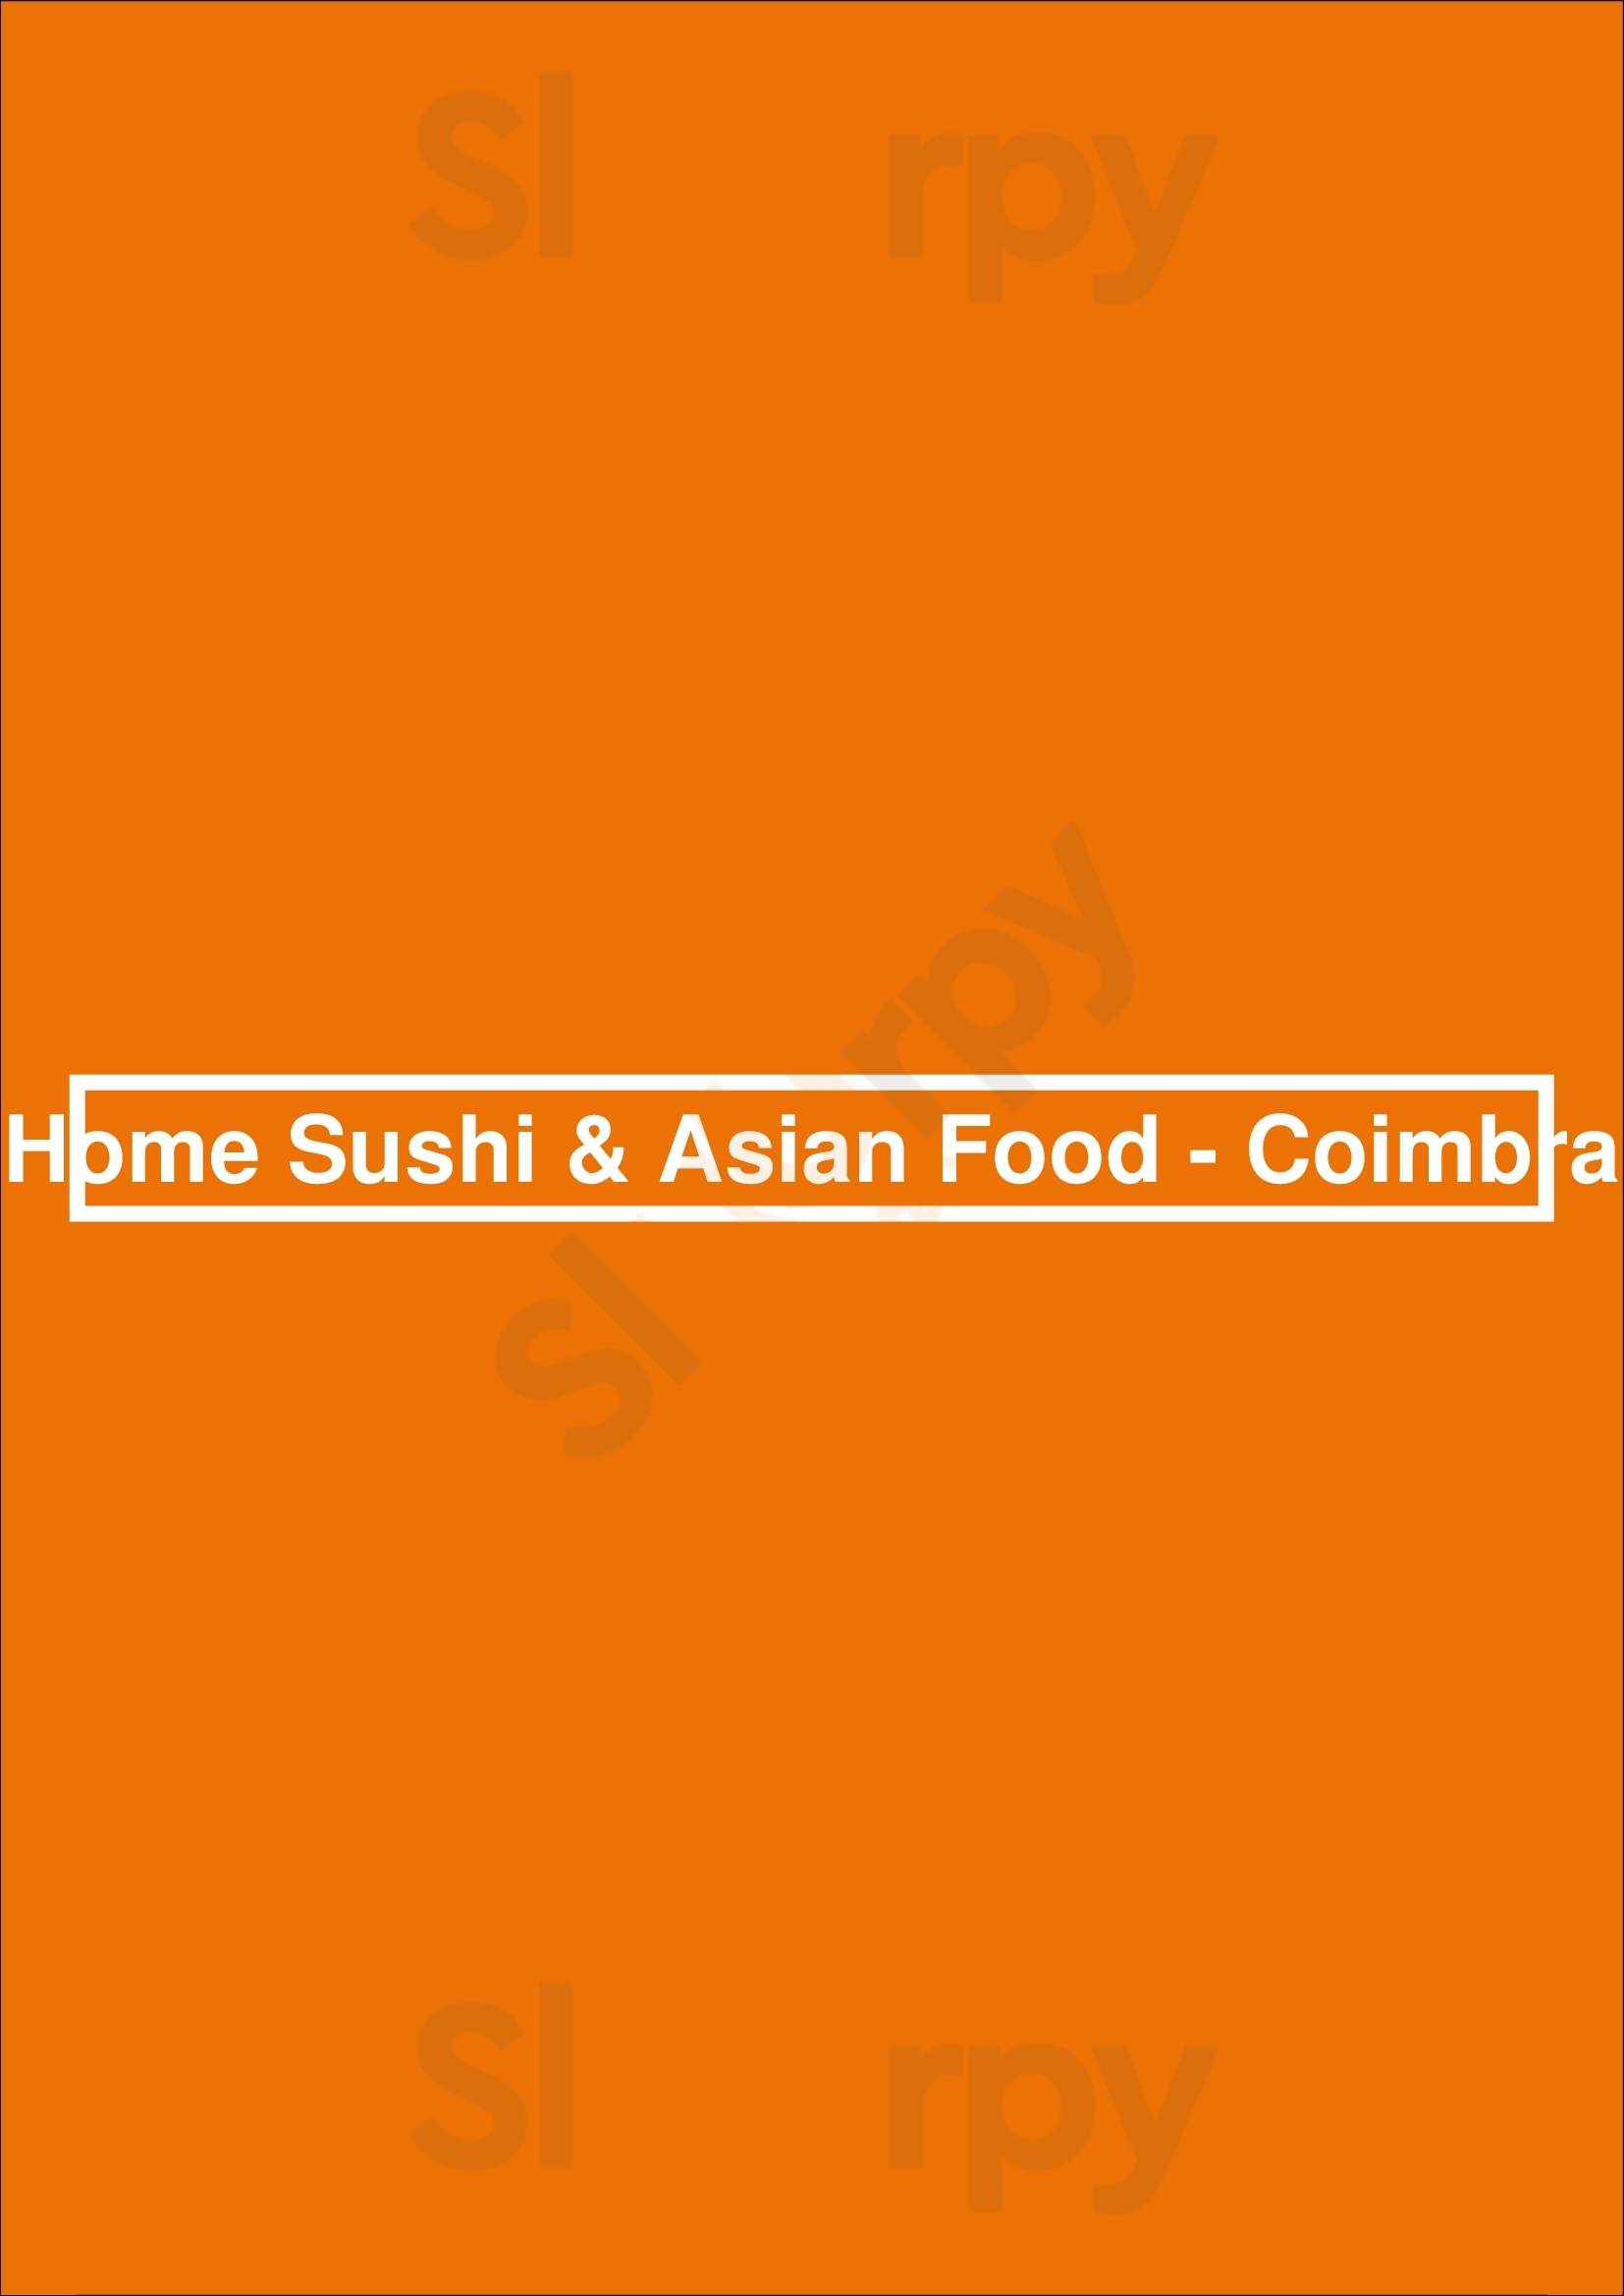 Home Sushi & Asian Food - Coimbra Coimbra Menu - 1